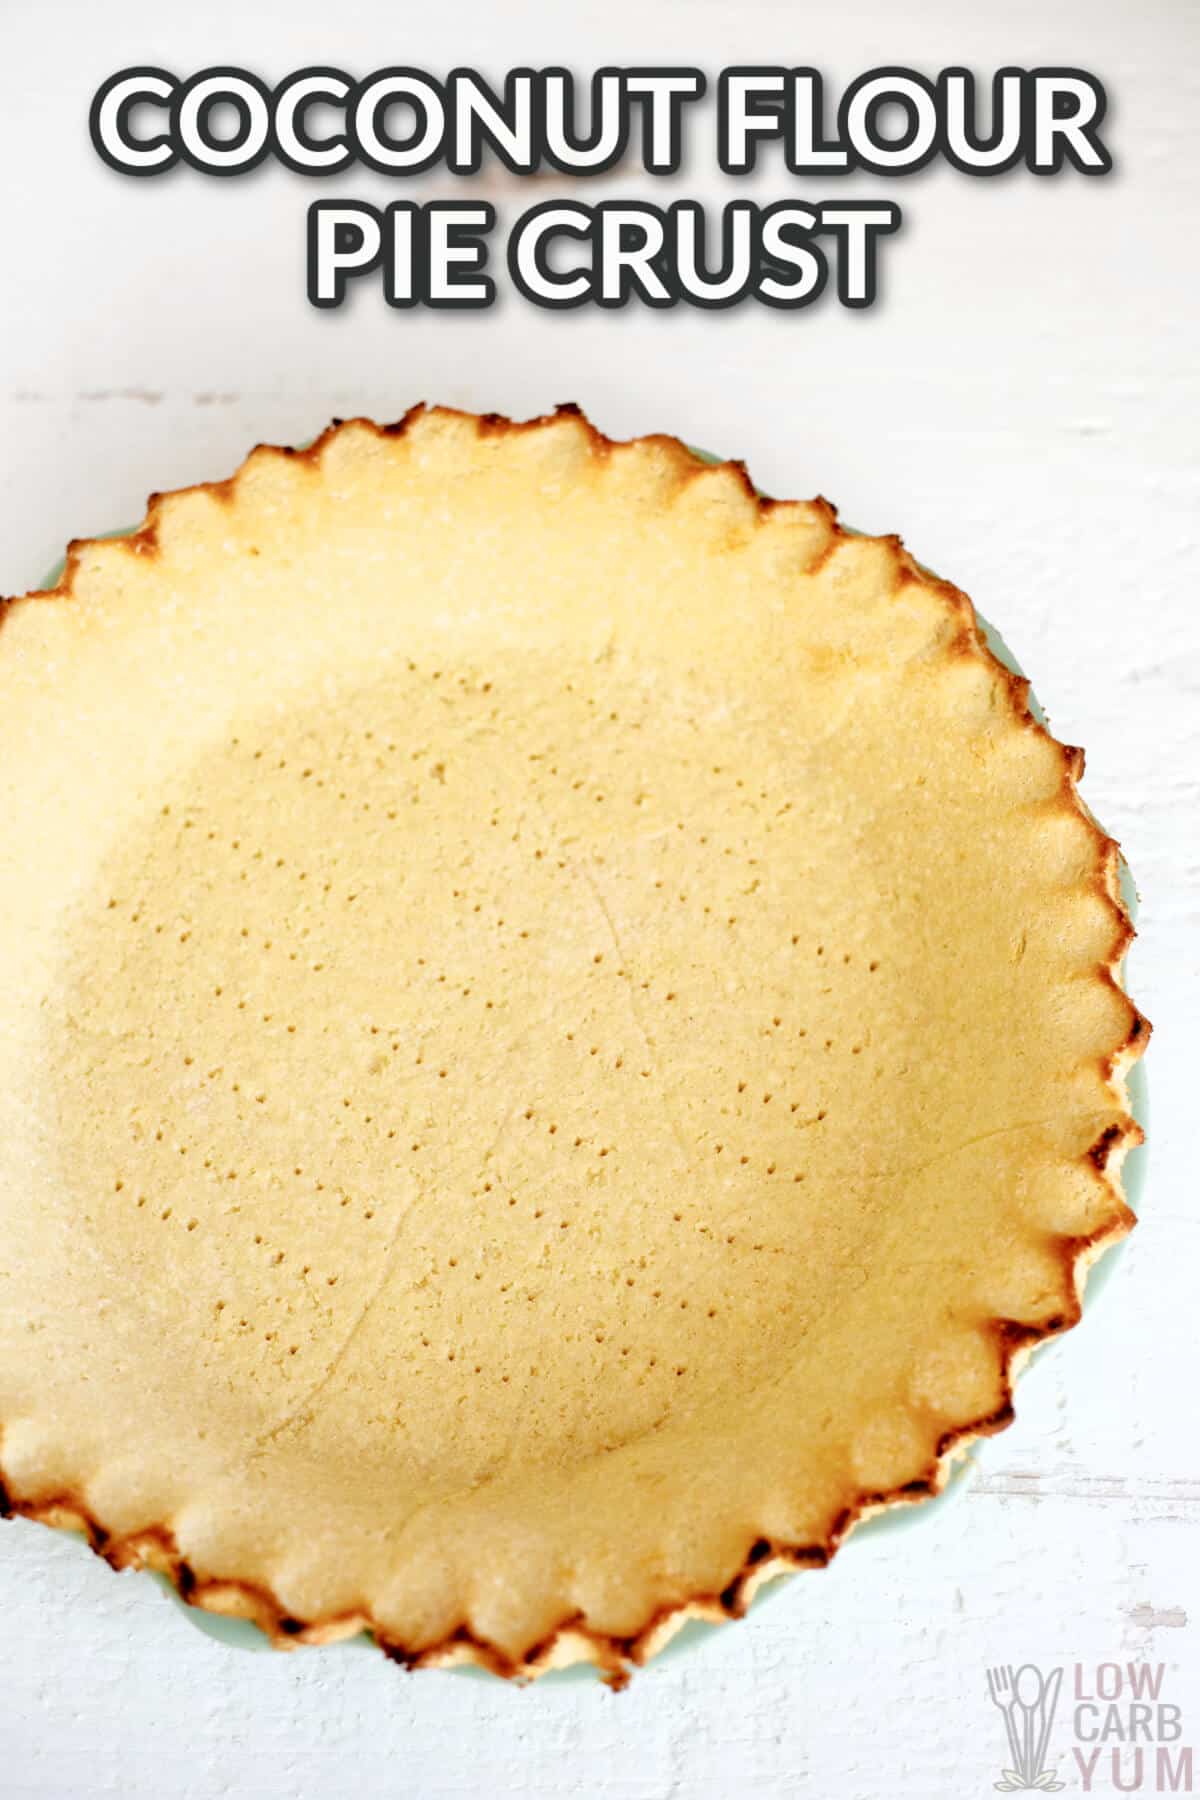 coconut flour pie crust with text overlay